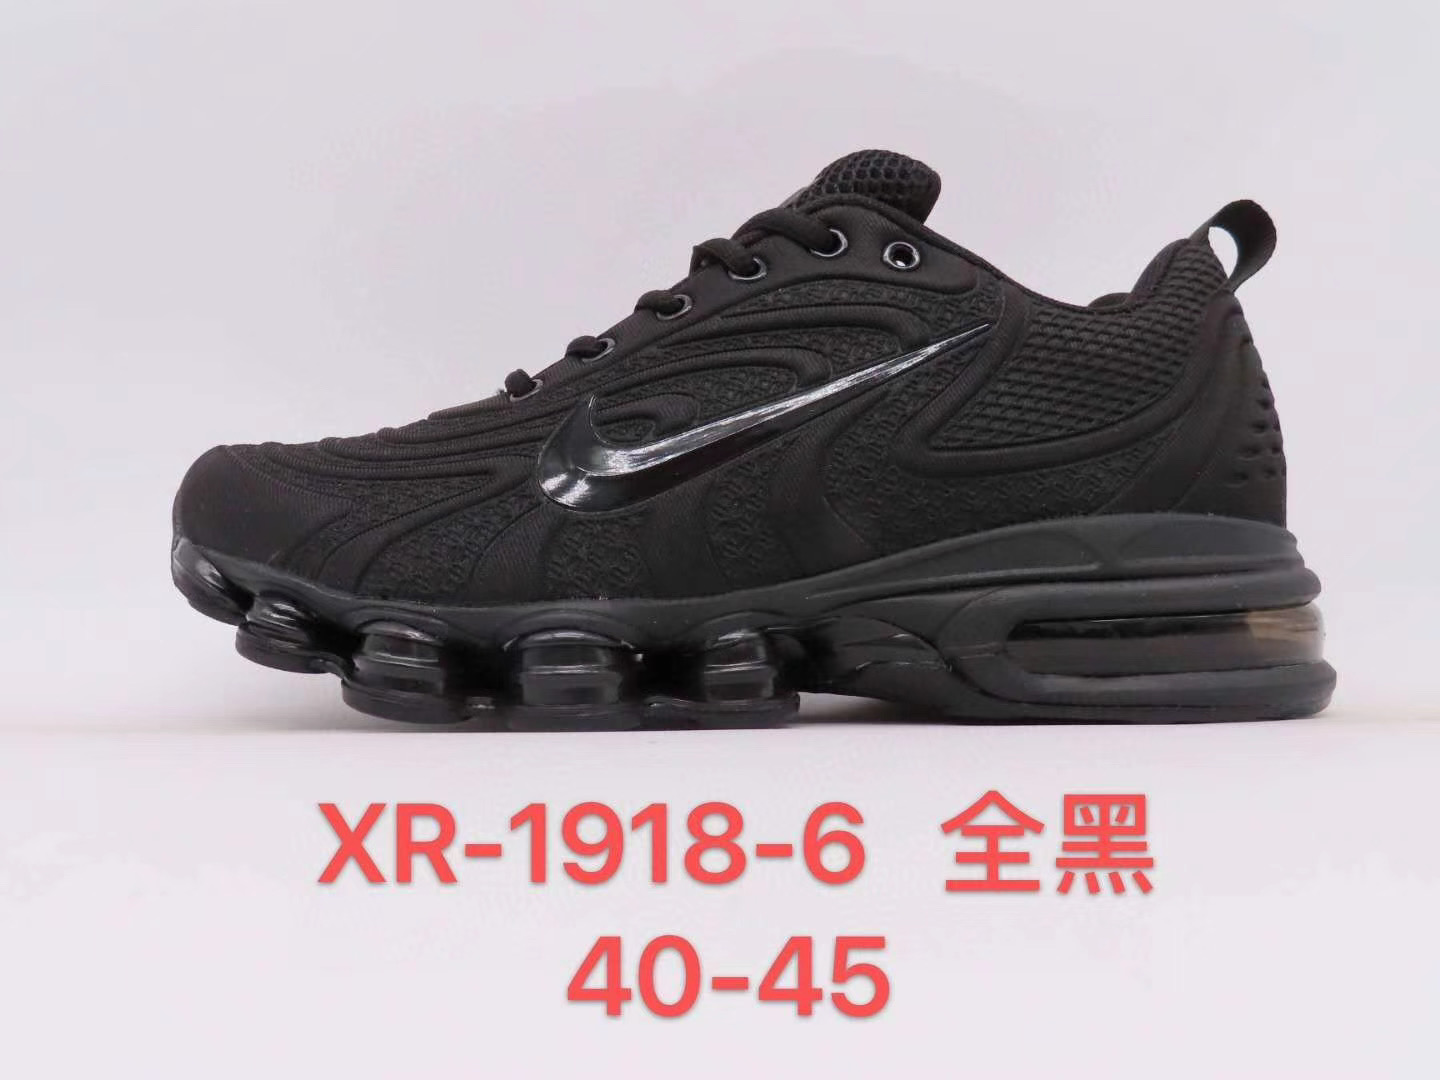 Nike Air Max 2019.6 Voyager Black Shoes